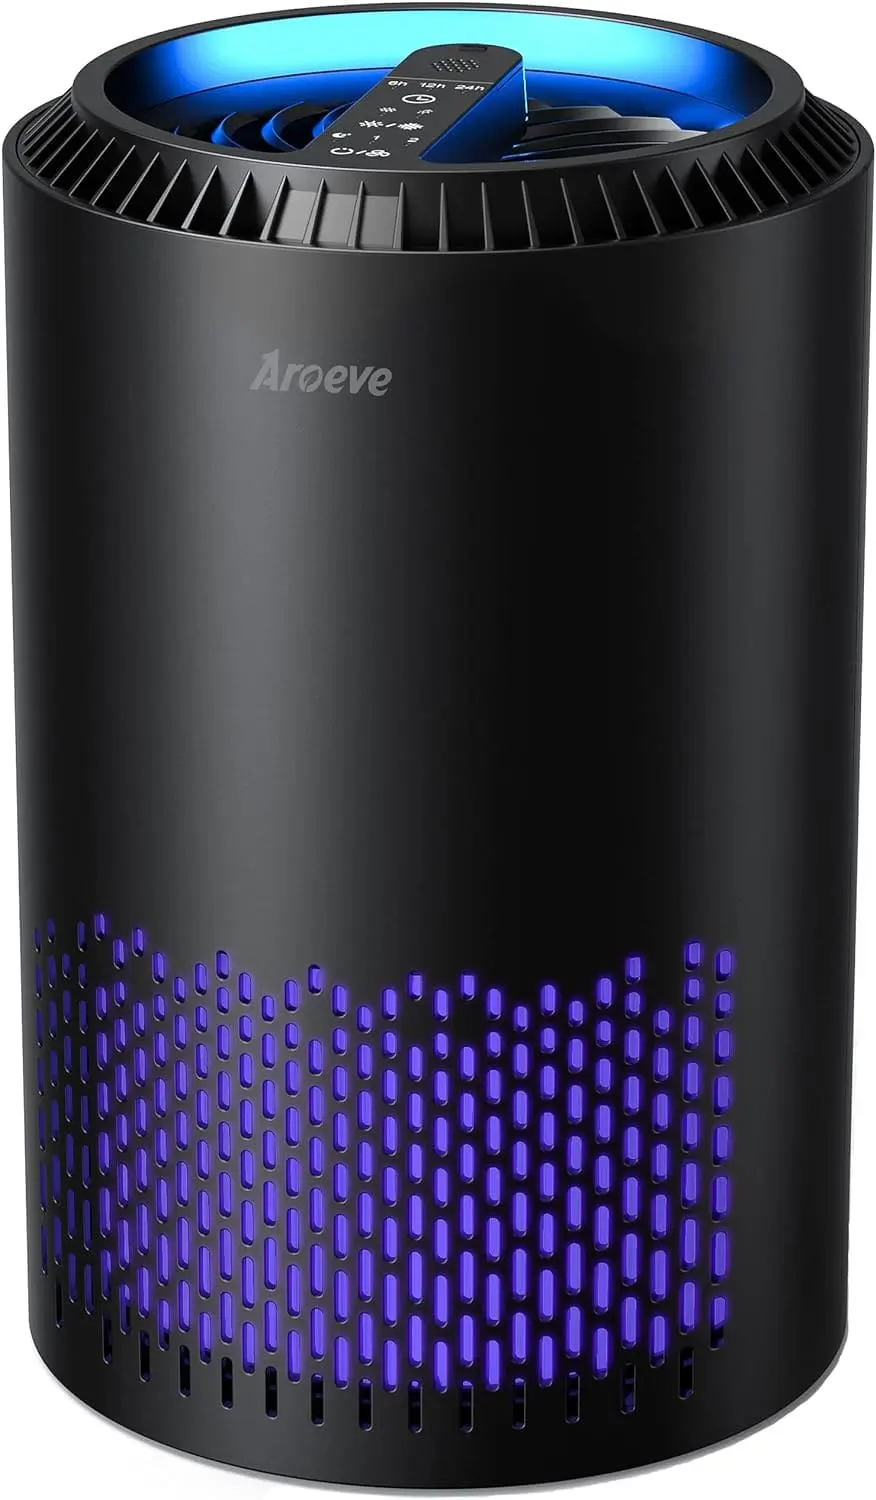 AROEVE Black Air Purifier Review